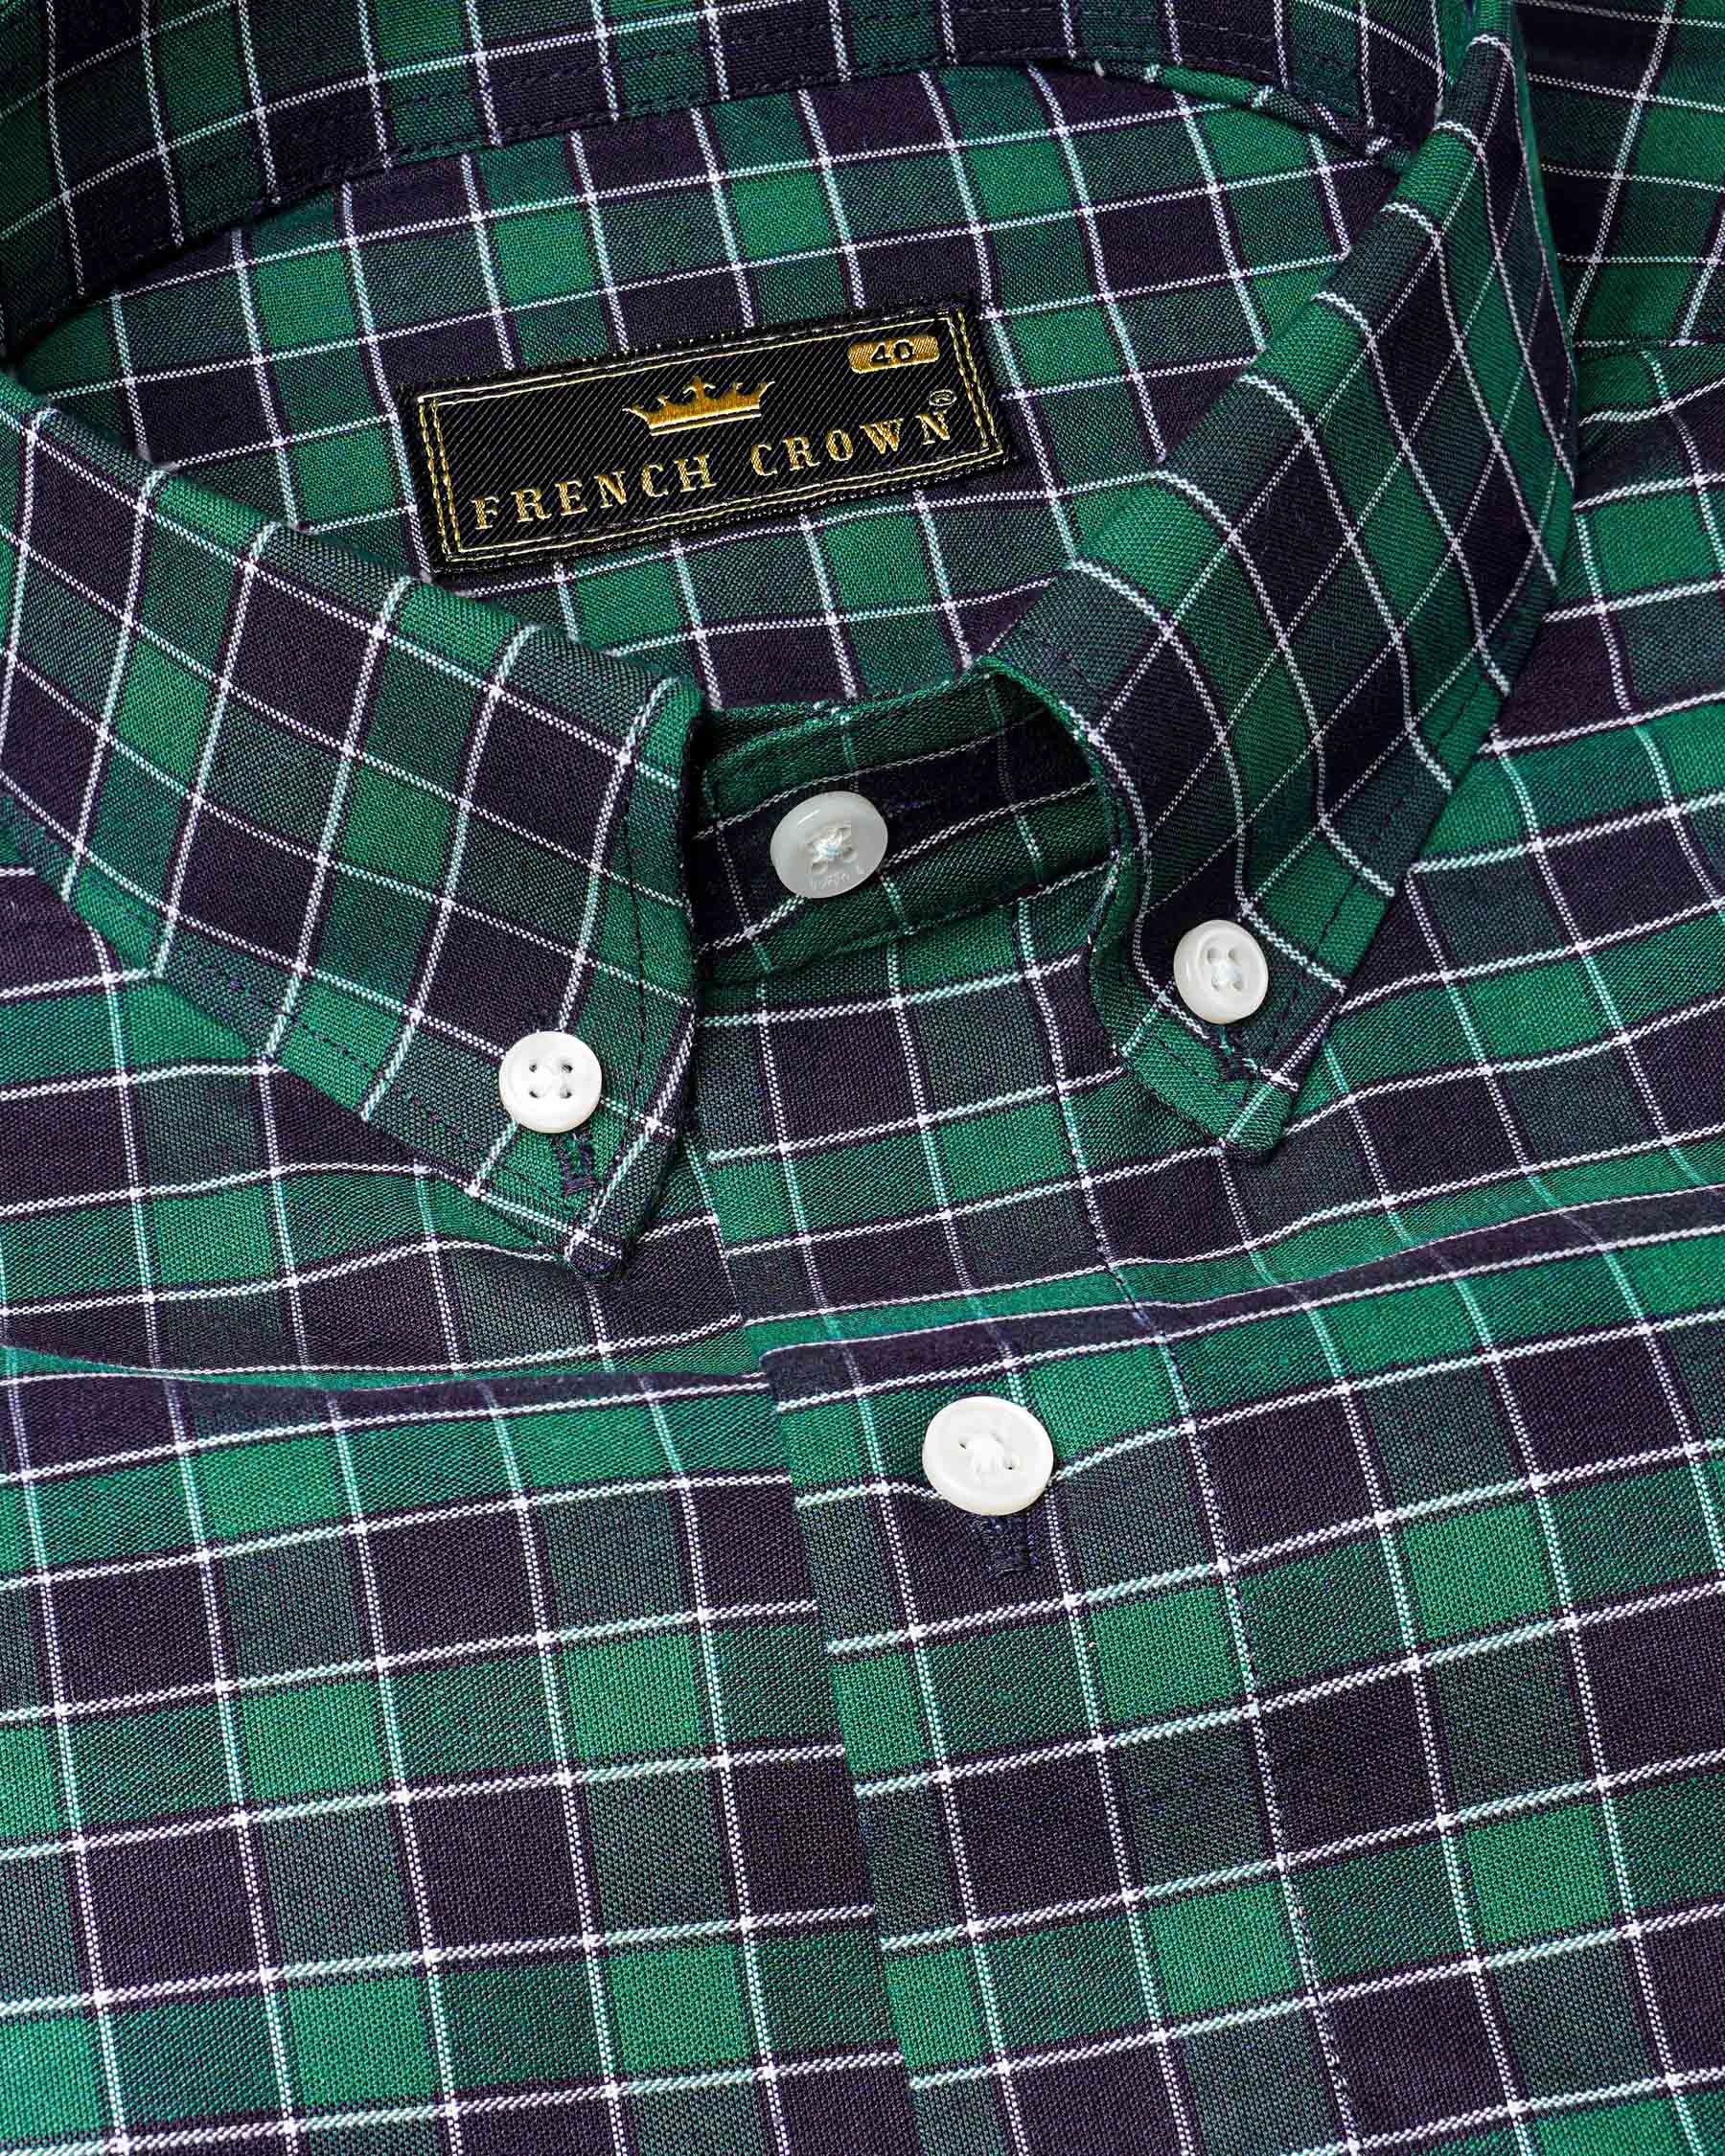 Causal Green and Martinique Blue Checkered Premium Cotton Shirt